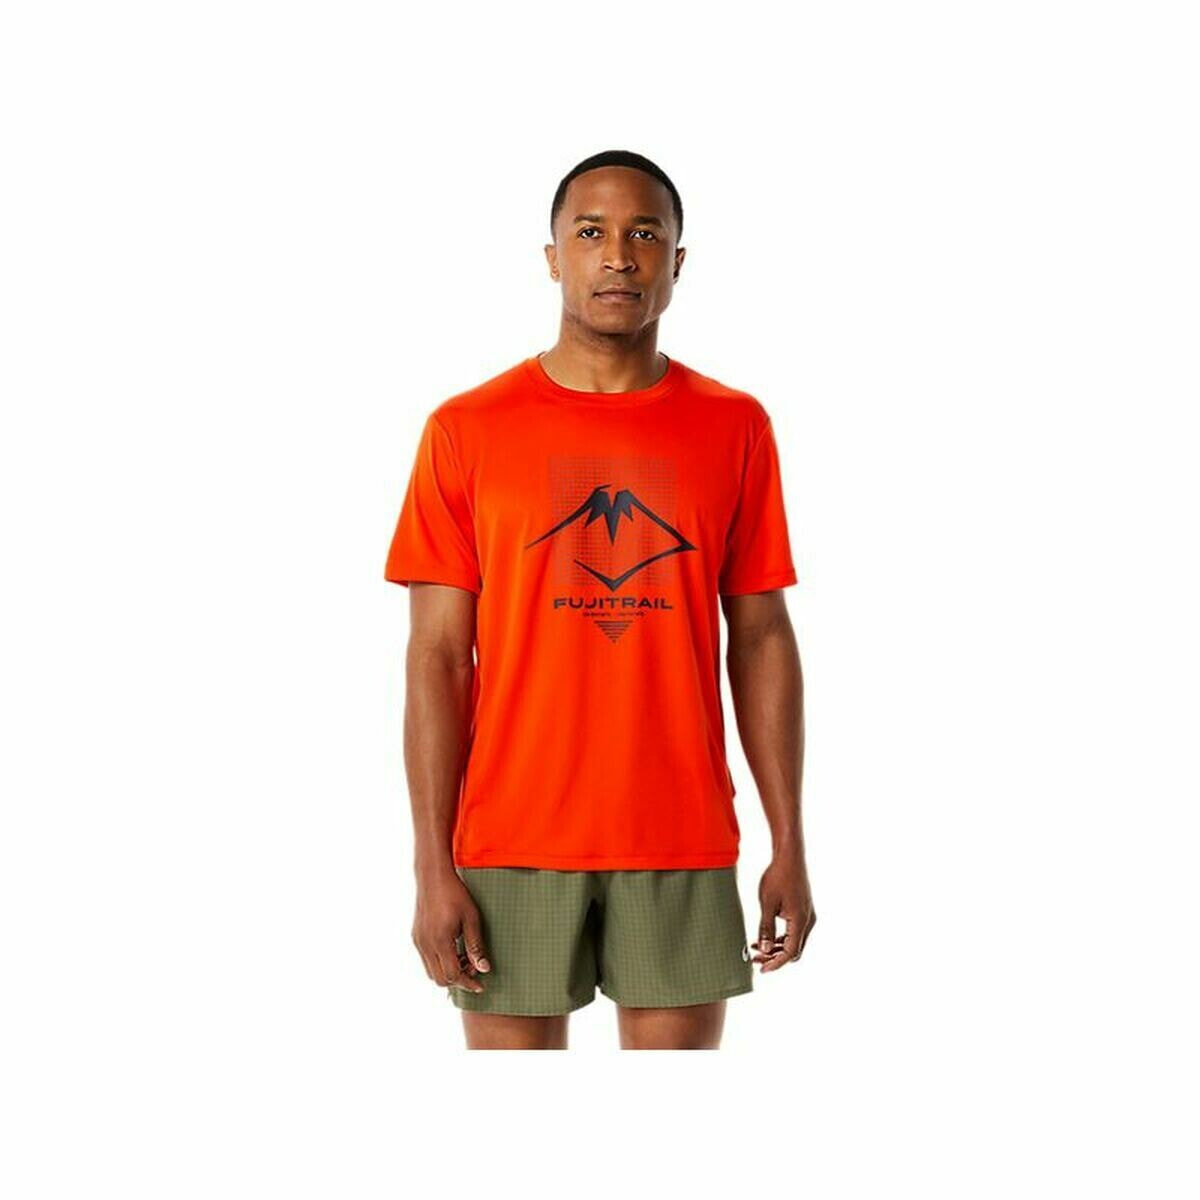 Men’s Short Sleeve T-Shirt Asics FUJITRAIL Orange